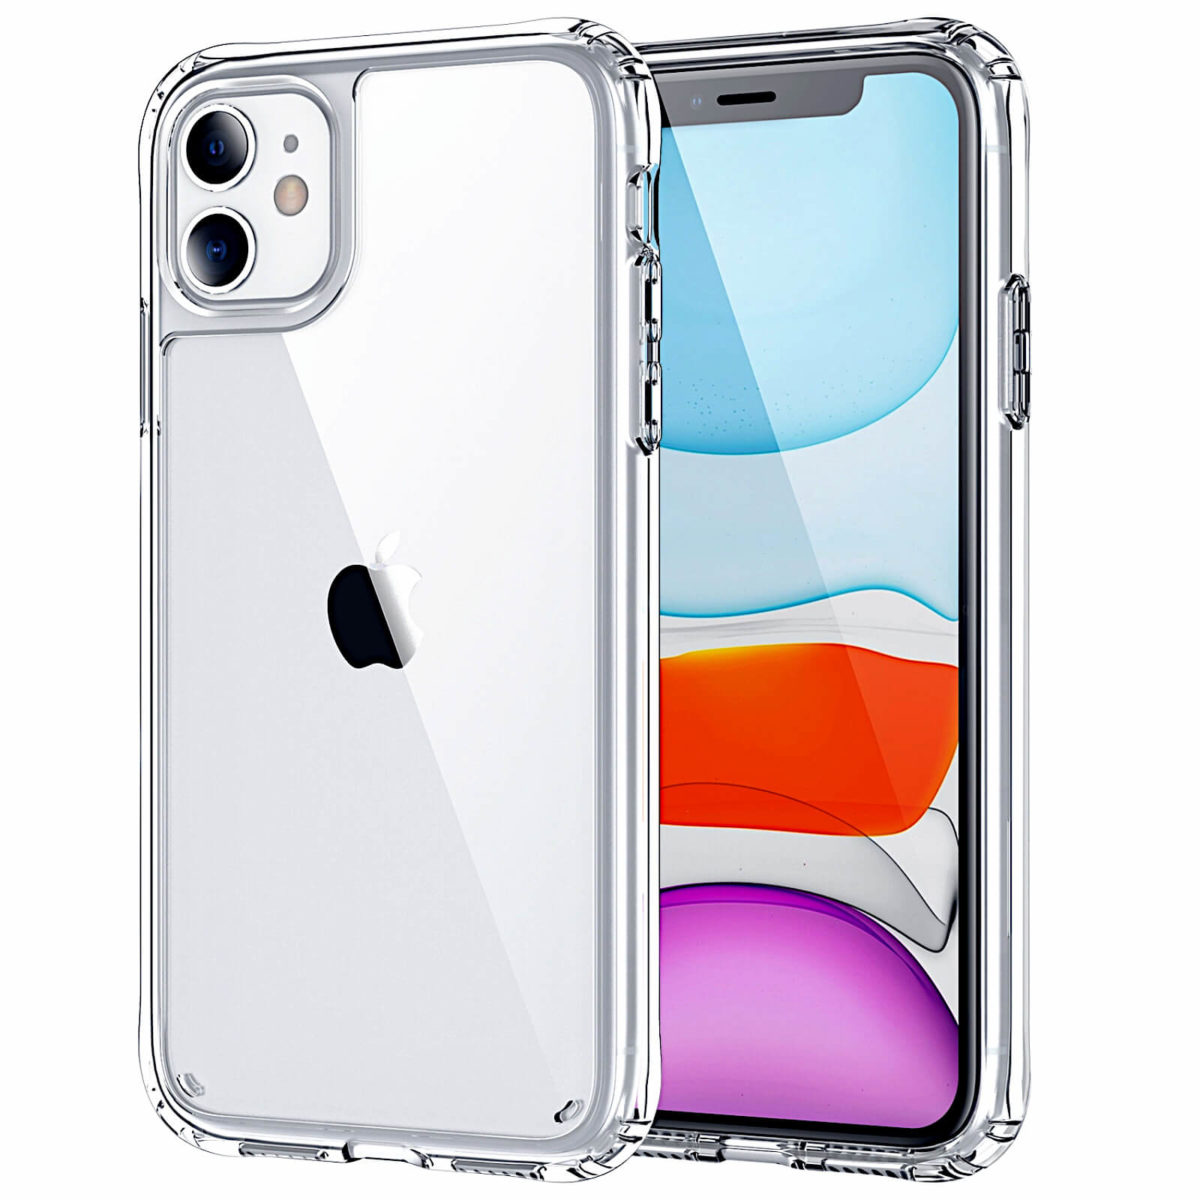 iphone 11 acryllic clear case